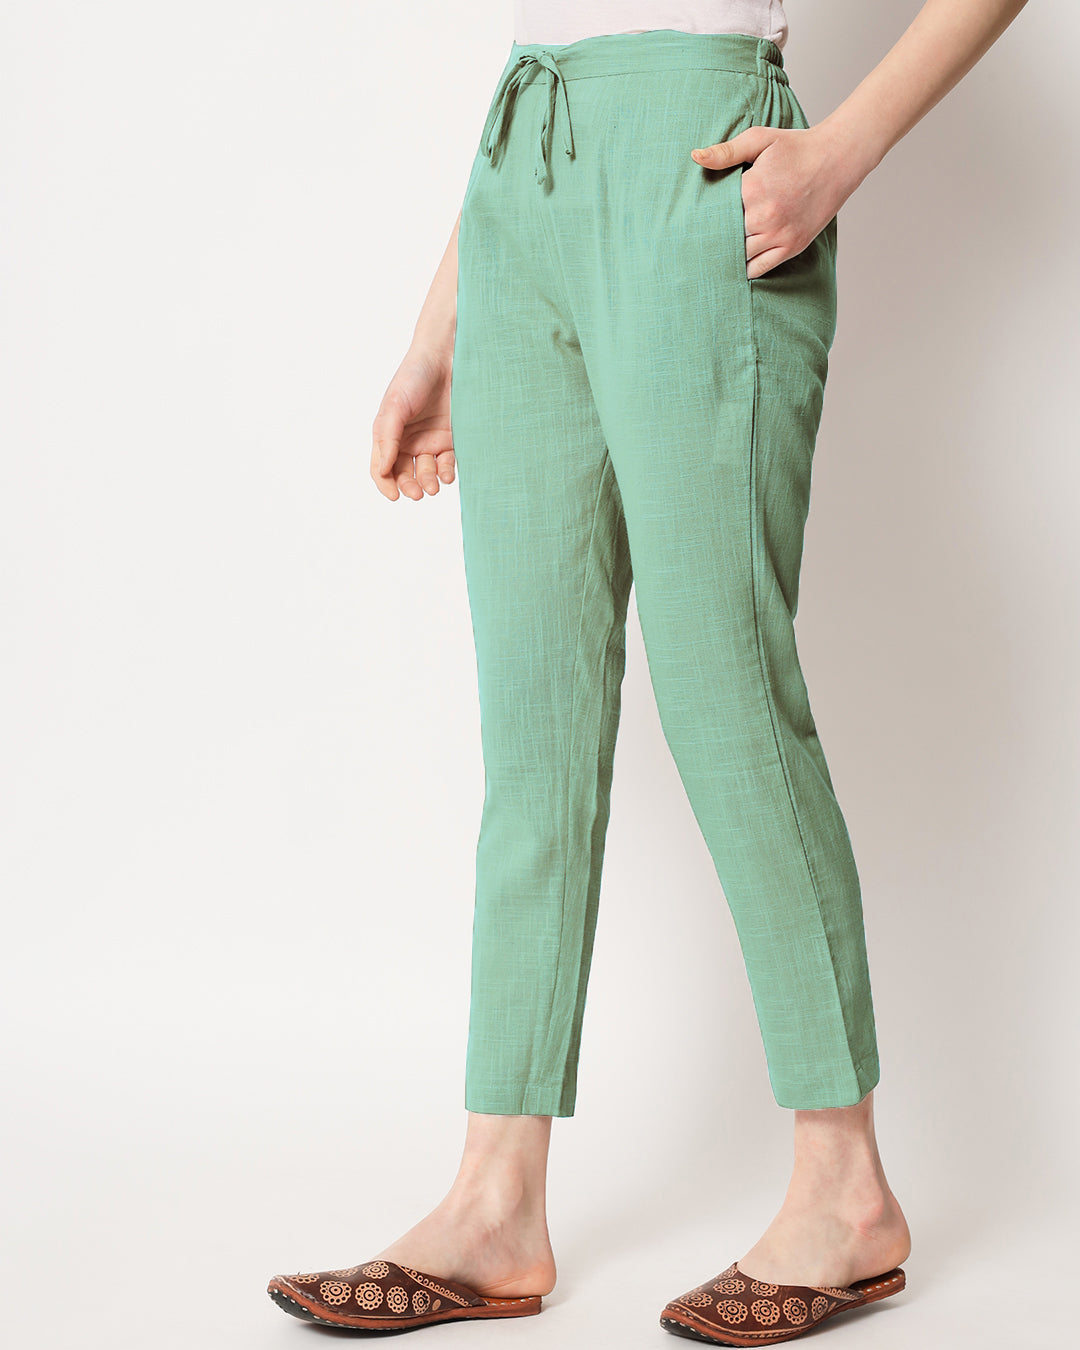 PATRORNA Green Mid Rise Slim Fit Cigarette Trousers